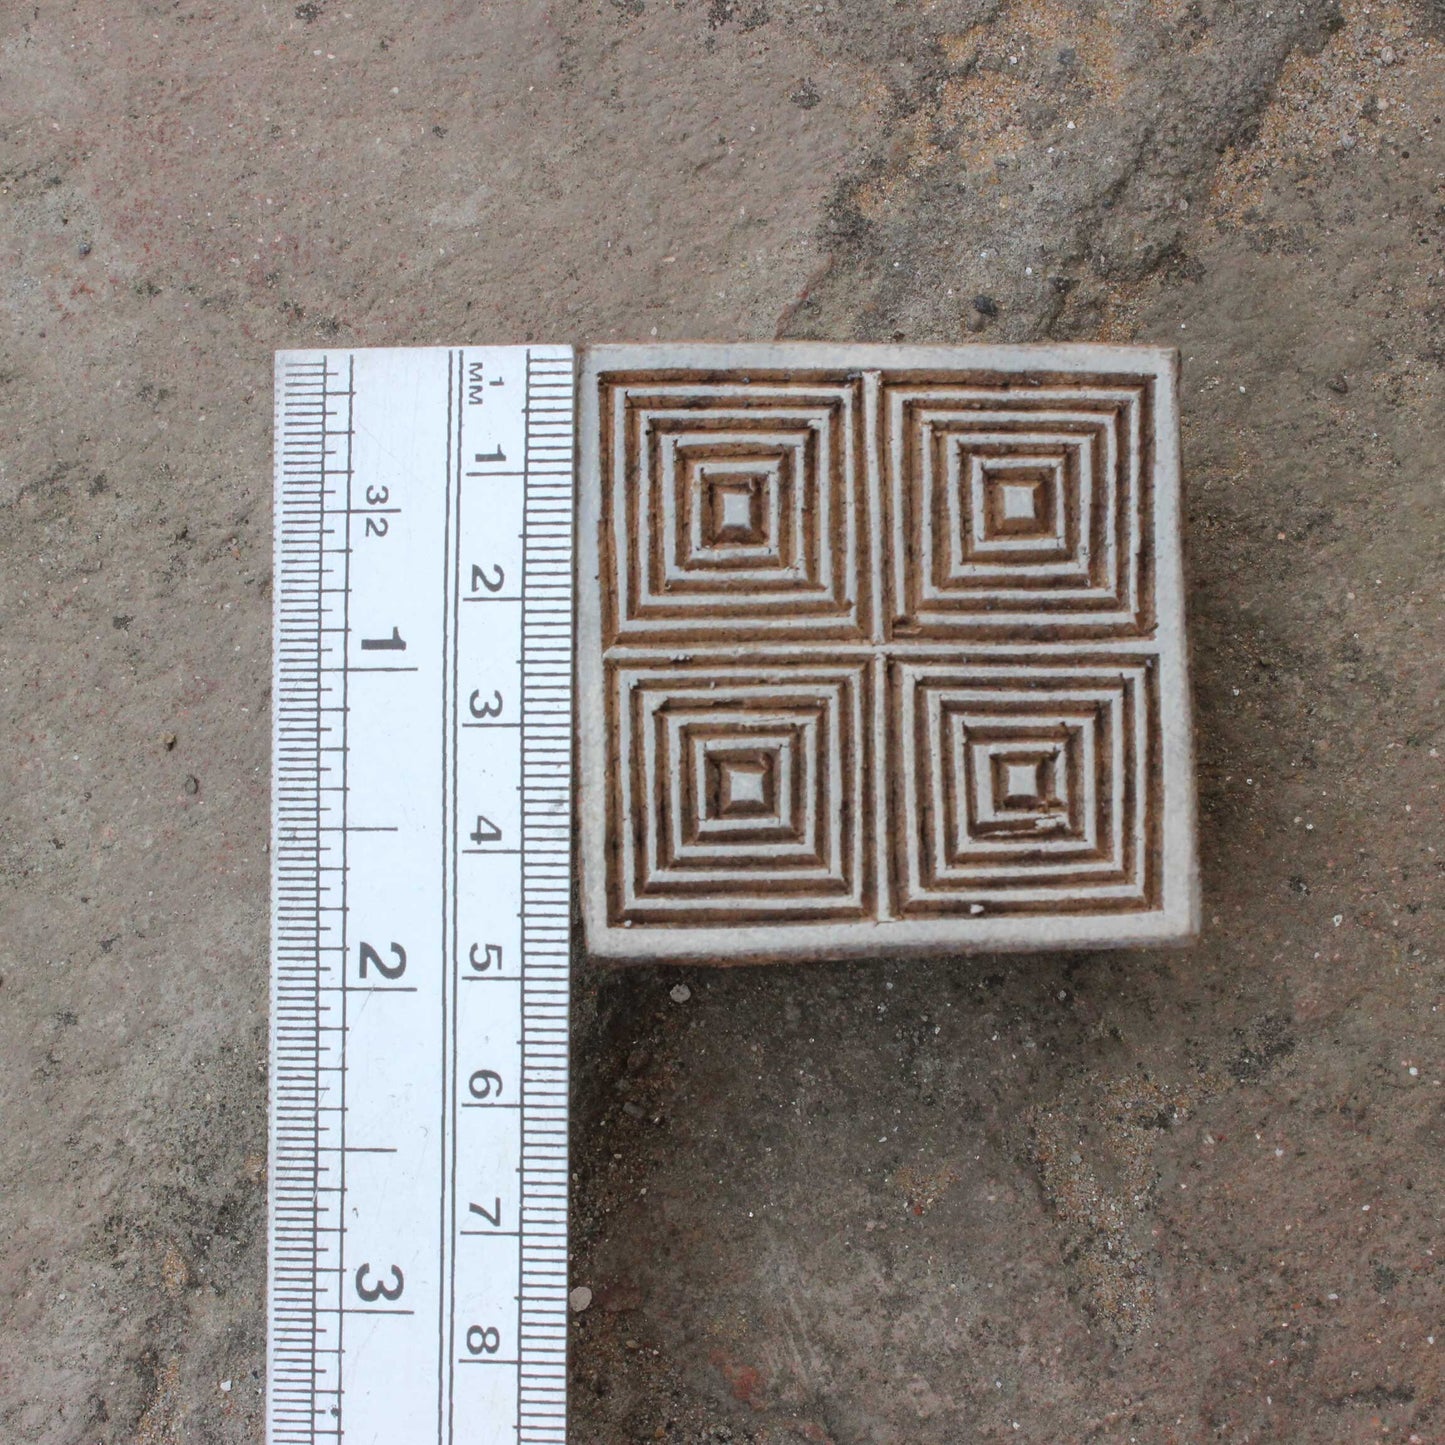 Celtic Block Stamp Square Wood Block Stamp Indian Fabric Block Stamp Hand Carved Textile Printing Block For Printing Geometric Soap Stamp